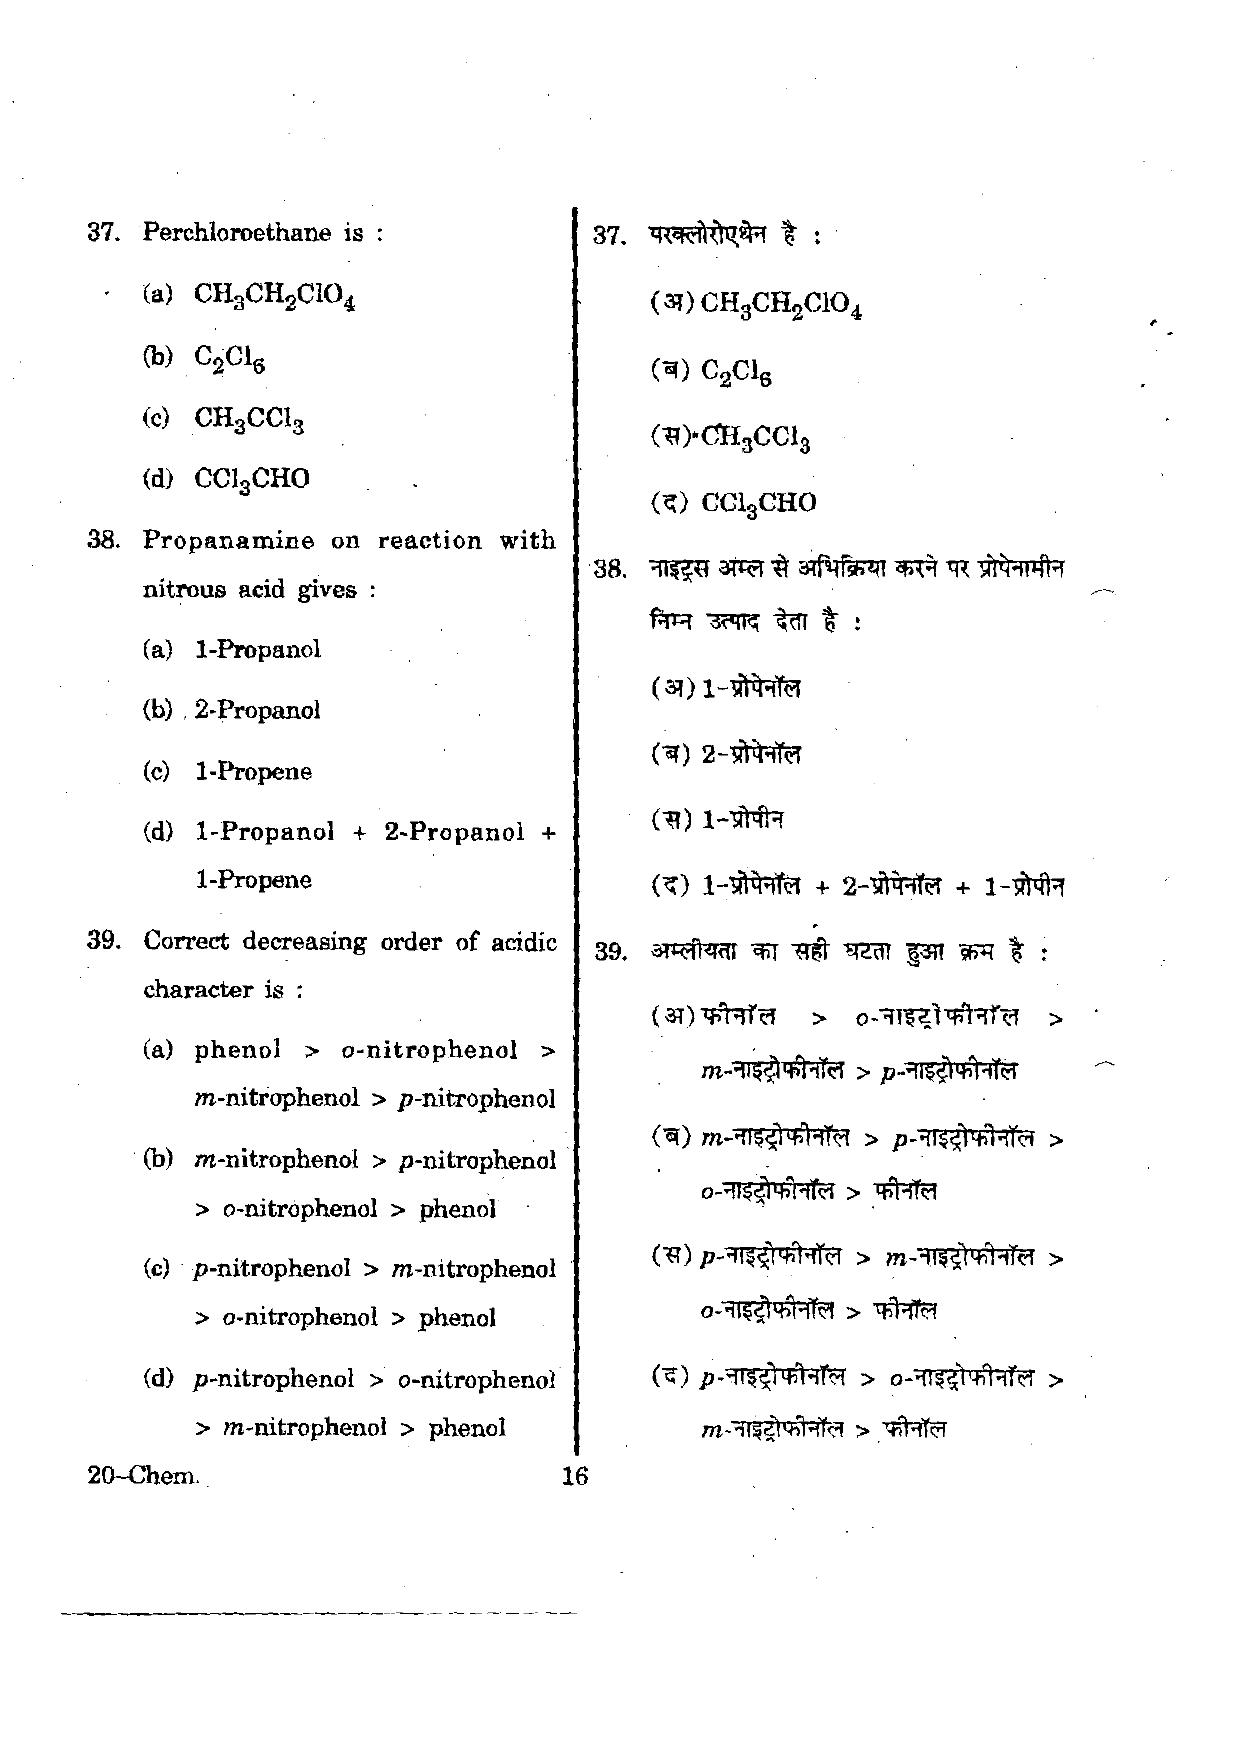 URATPG Chemistry 2012 Question Paper - Page 16